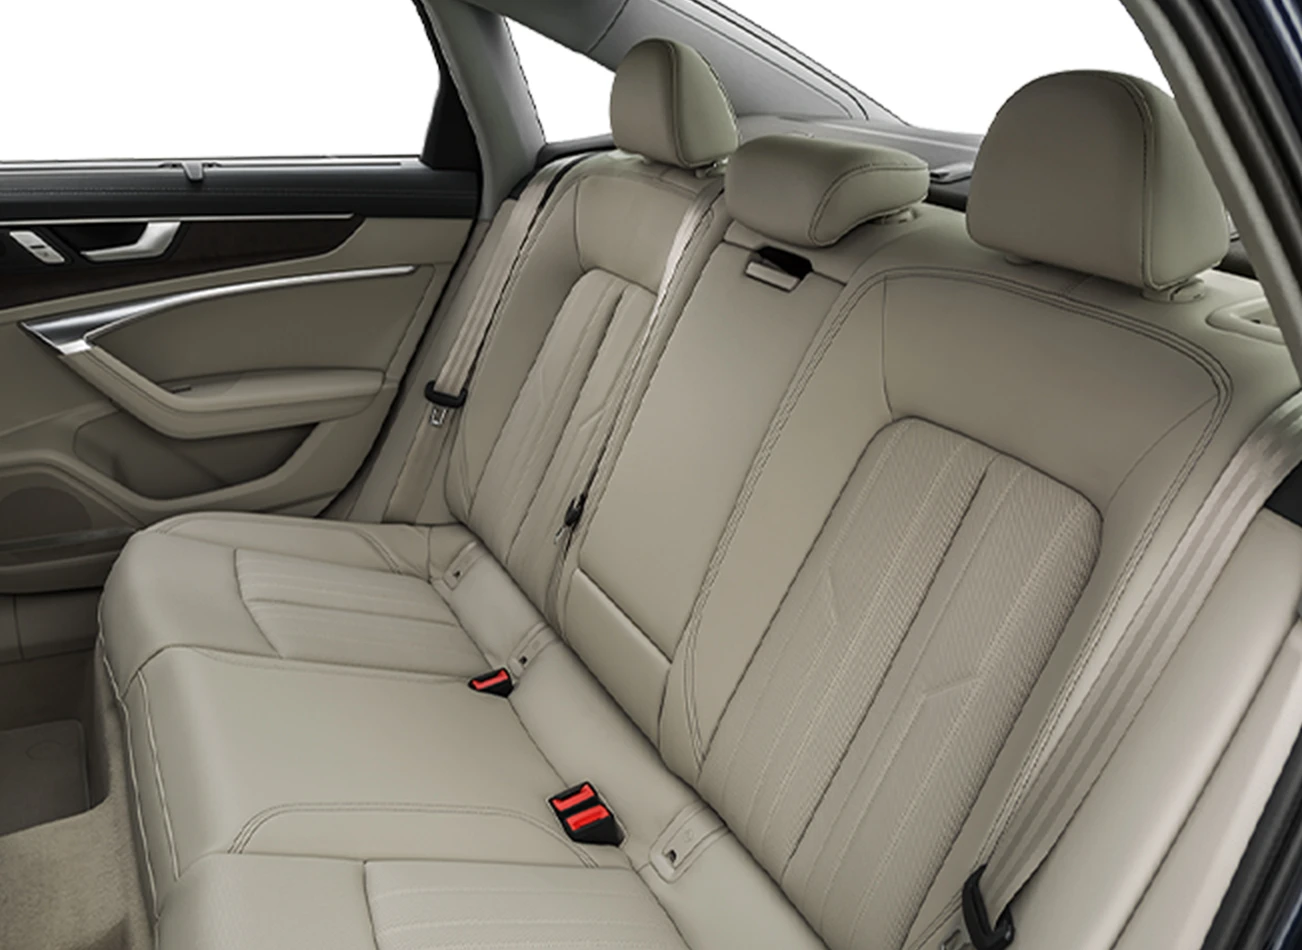 2020 Audi A6 Review: Backseats | CarMax